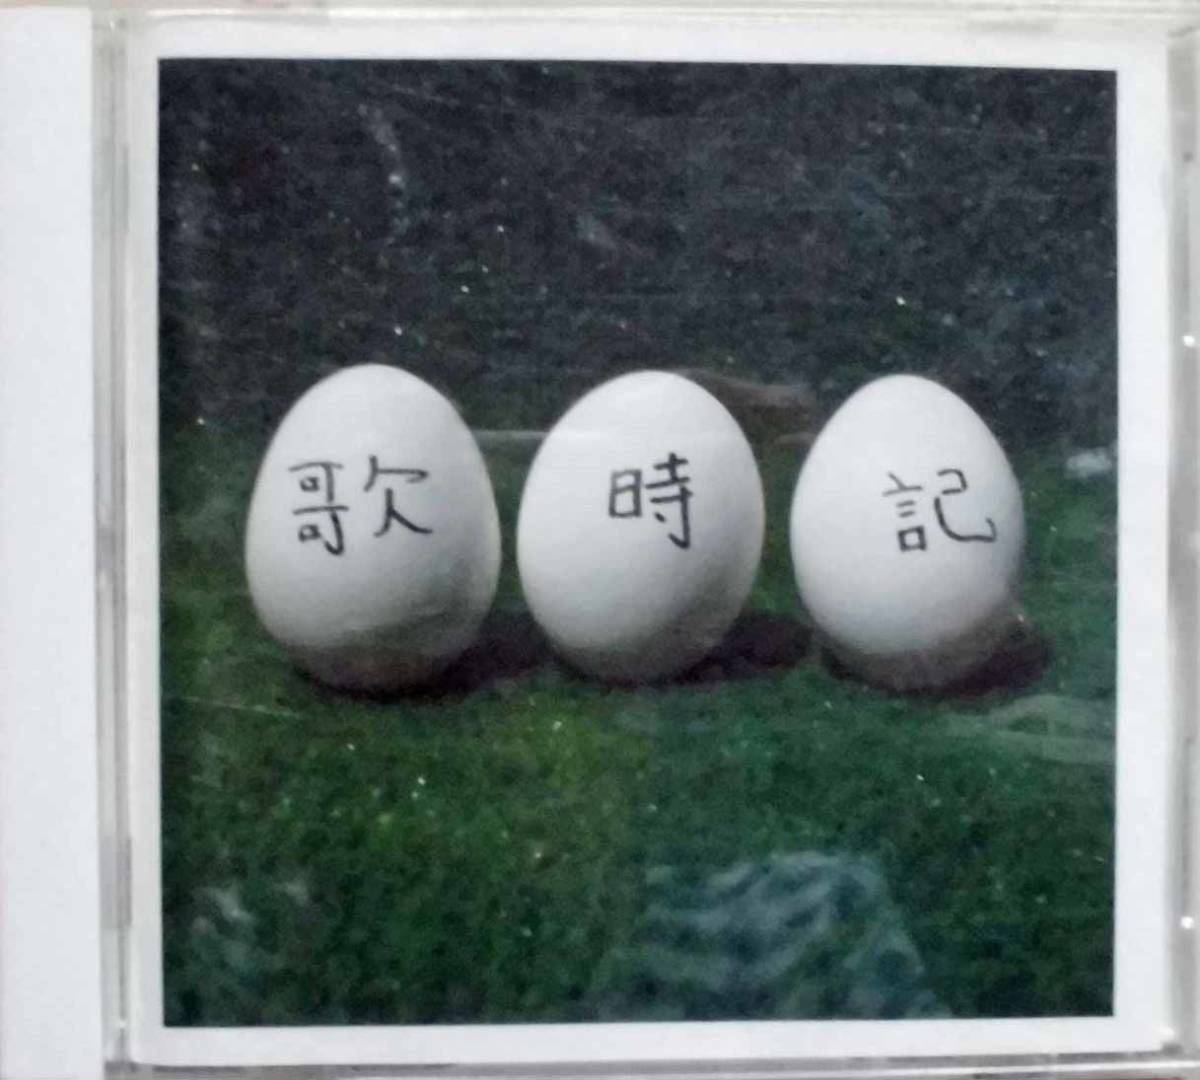 Yuzu ♪ CD [Bundled] Quality guarantee ♪ Singing -The two big egg shows